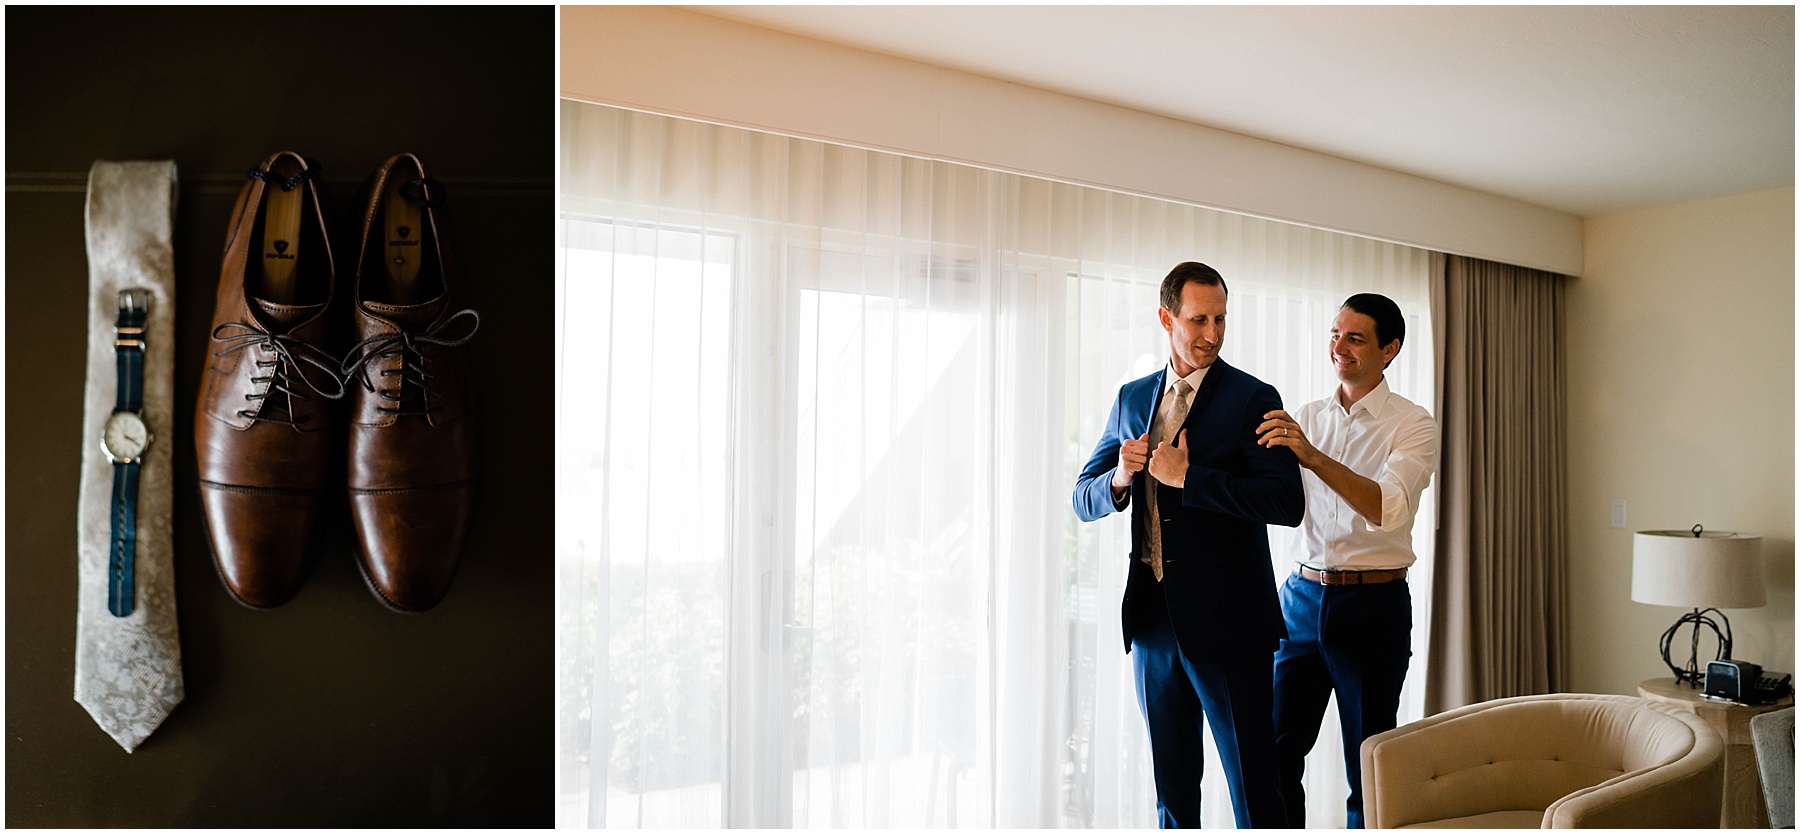 Groomsmen helps groom dress in final details on wedding day at JW Marriott Marco Island in Florida.